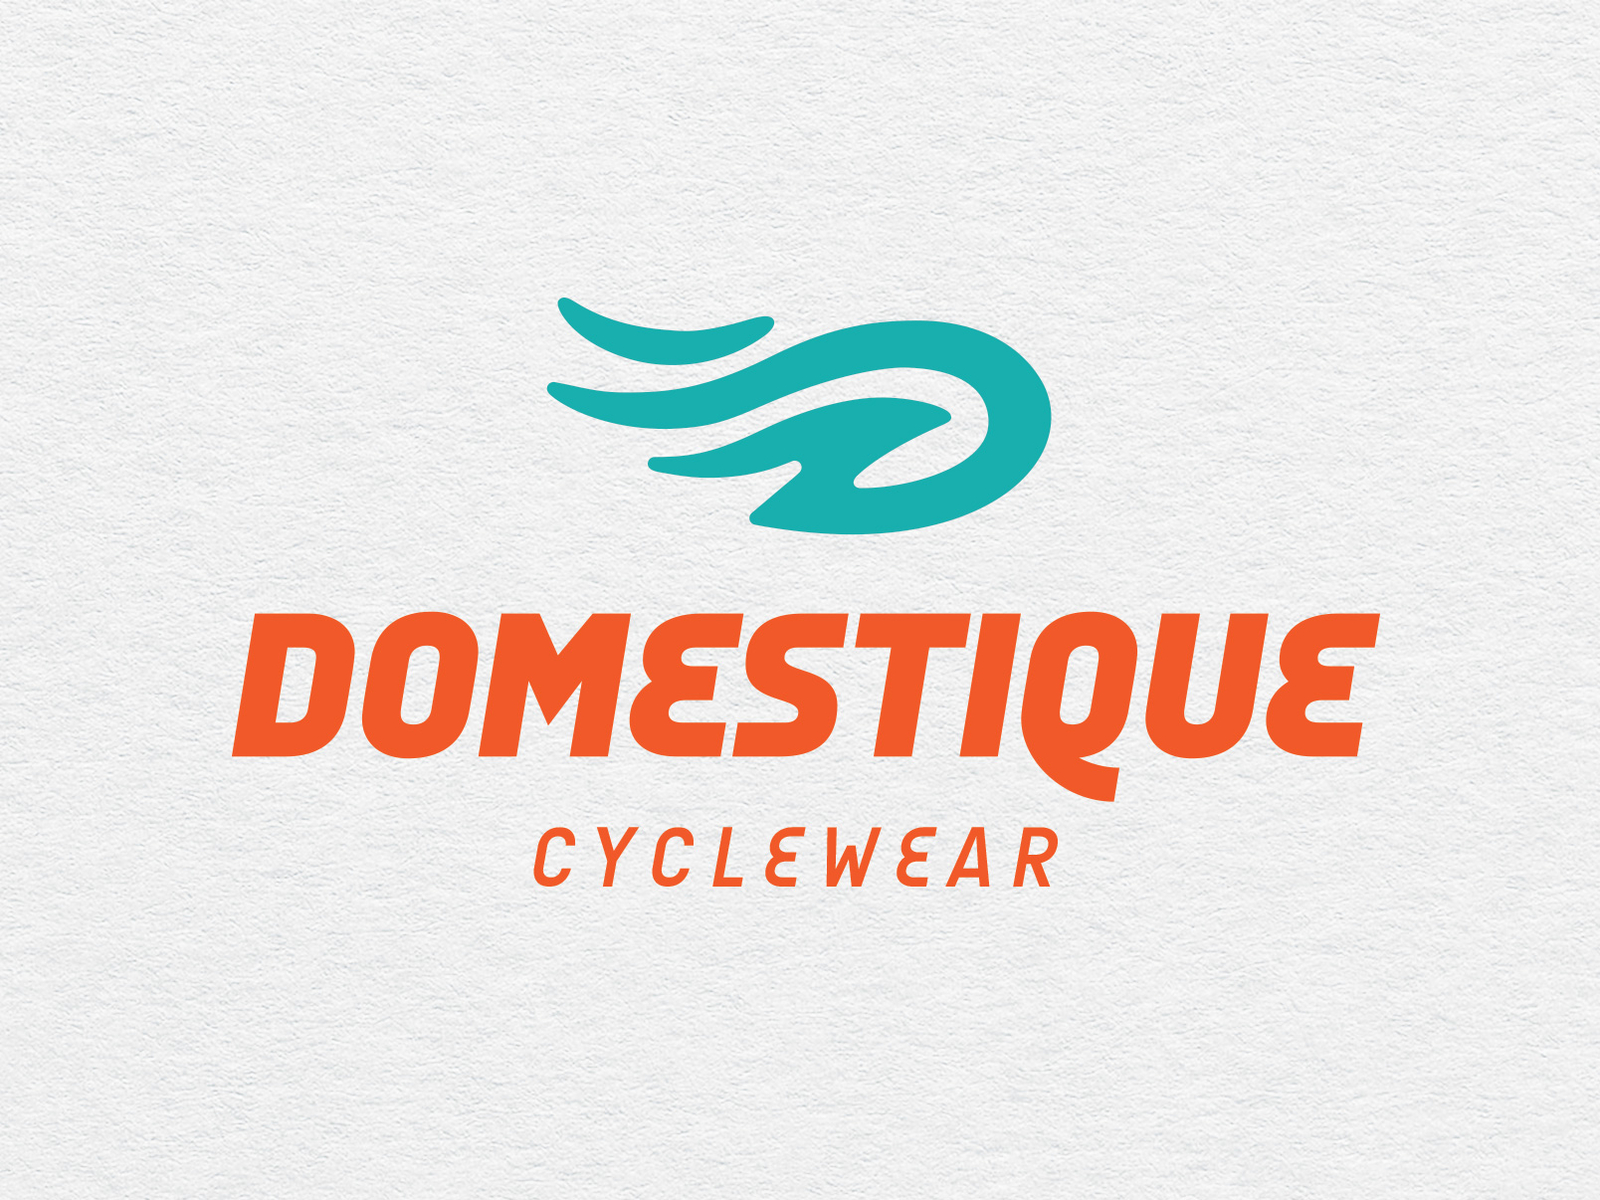 Domestique Cyclewear by Gary Klingemann on Dribbble